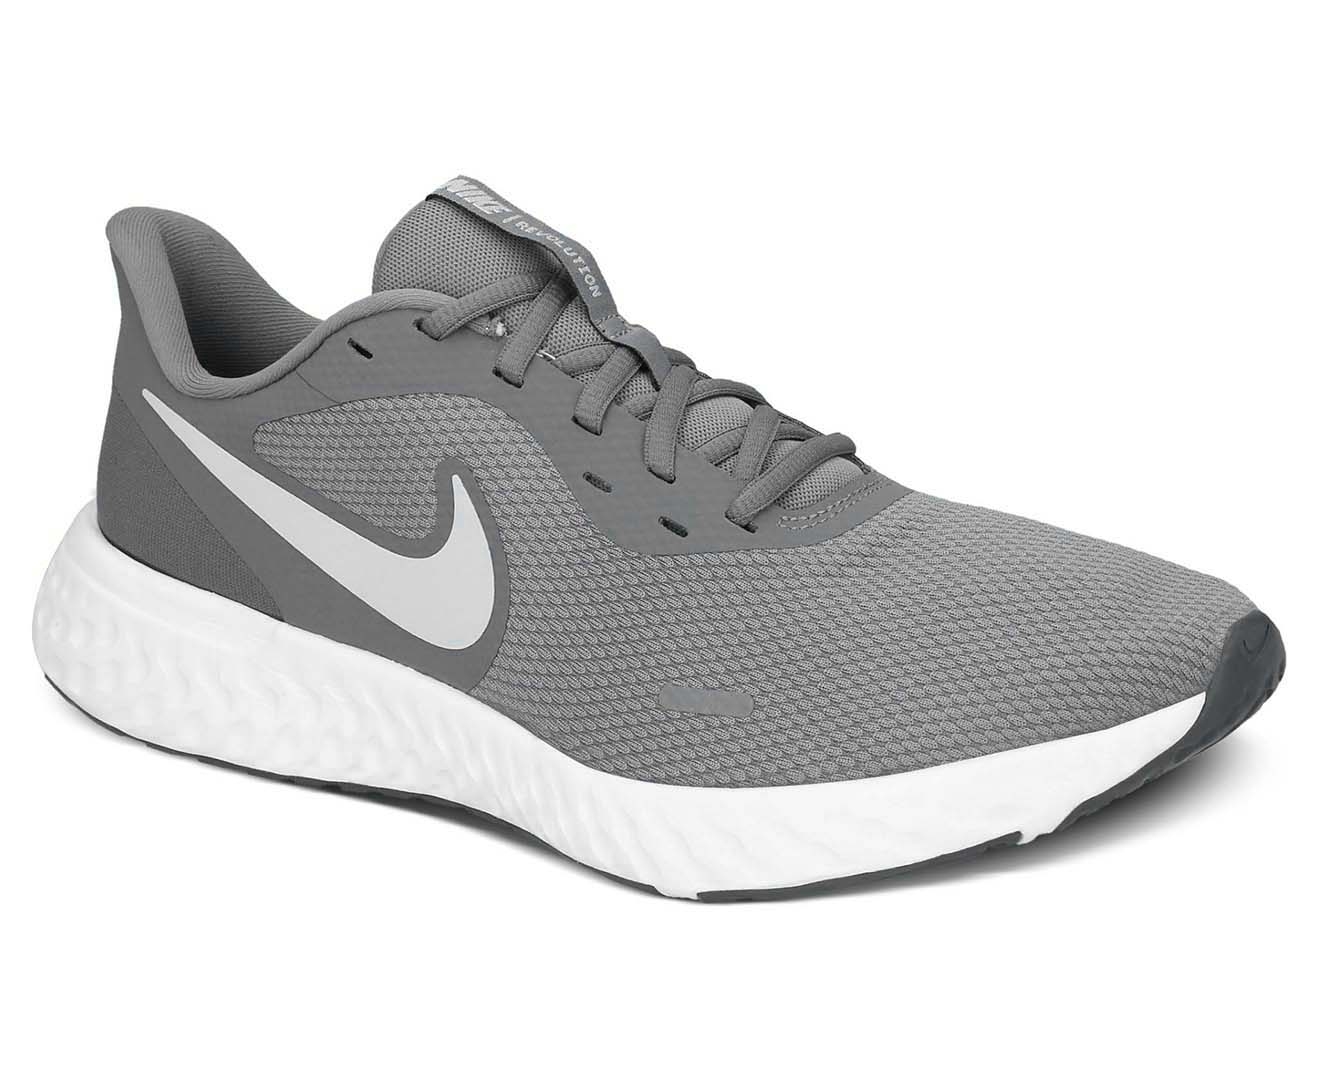 Nike Men's Revolution 5 Running Shoes - Cool Grey/Pure Platinum | Catch ...